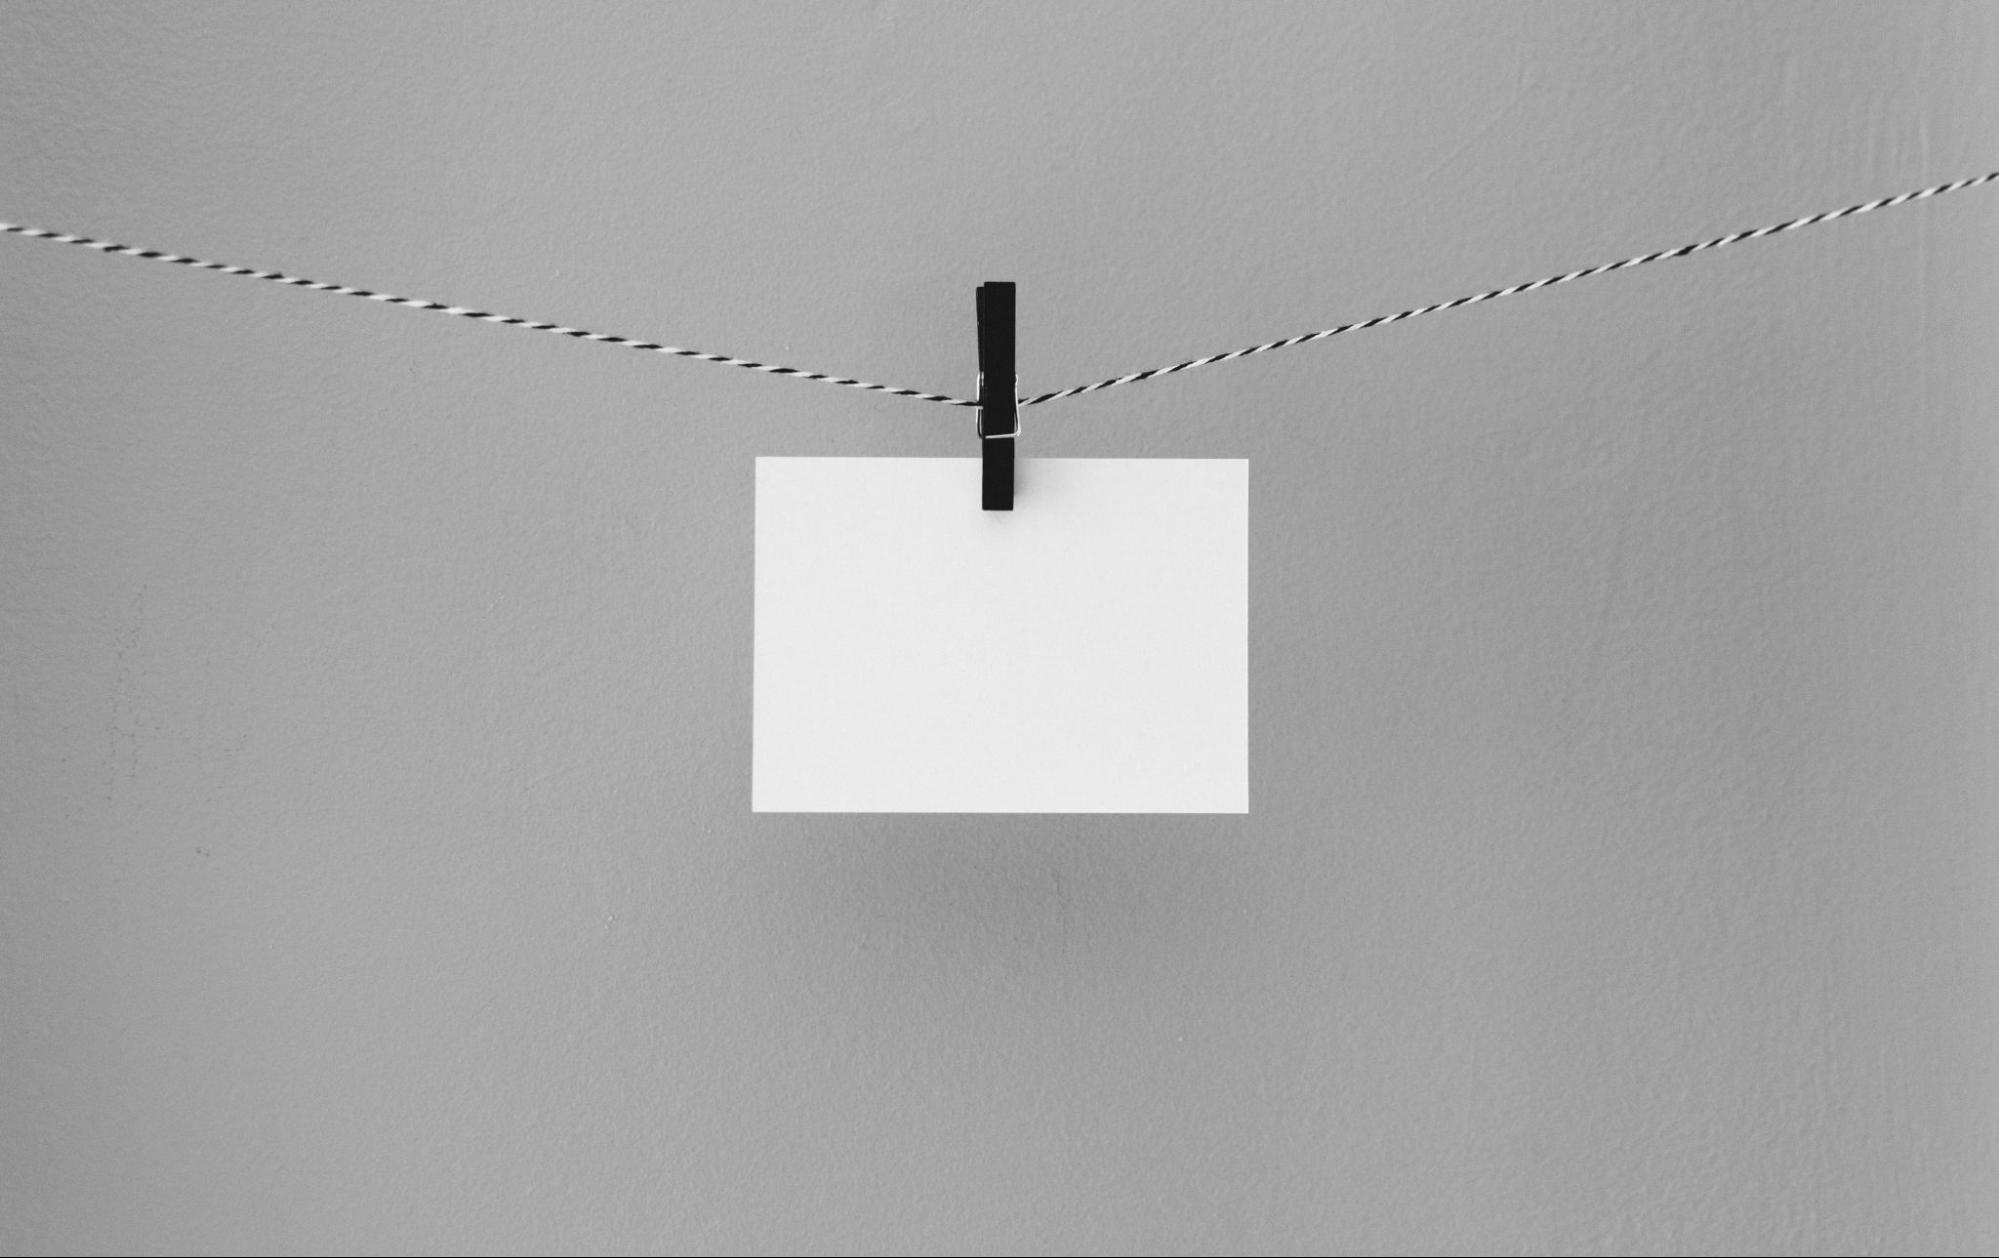 White card hanging from horizontal string